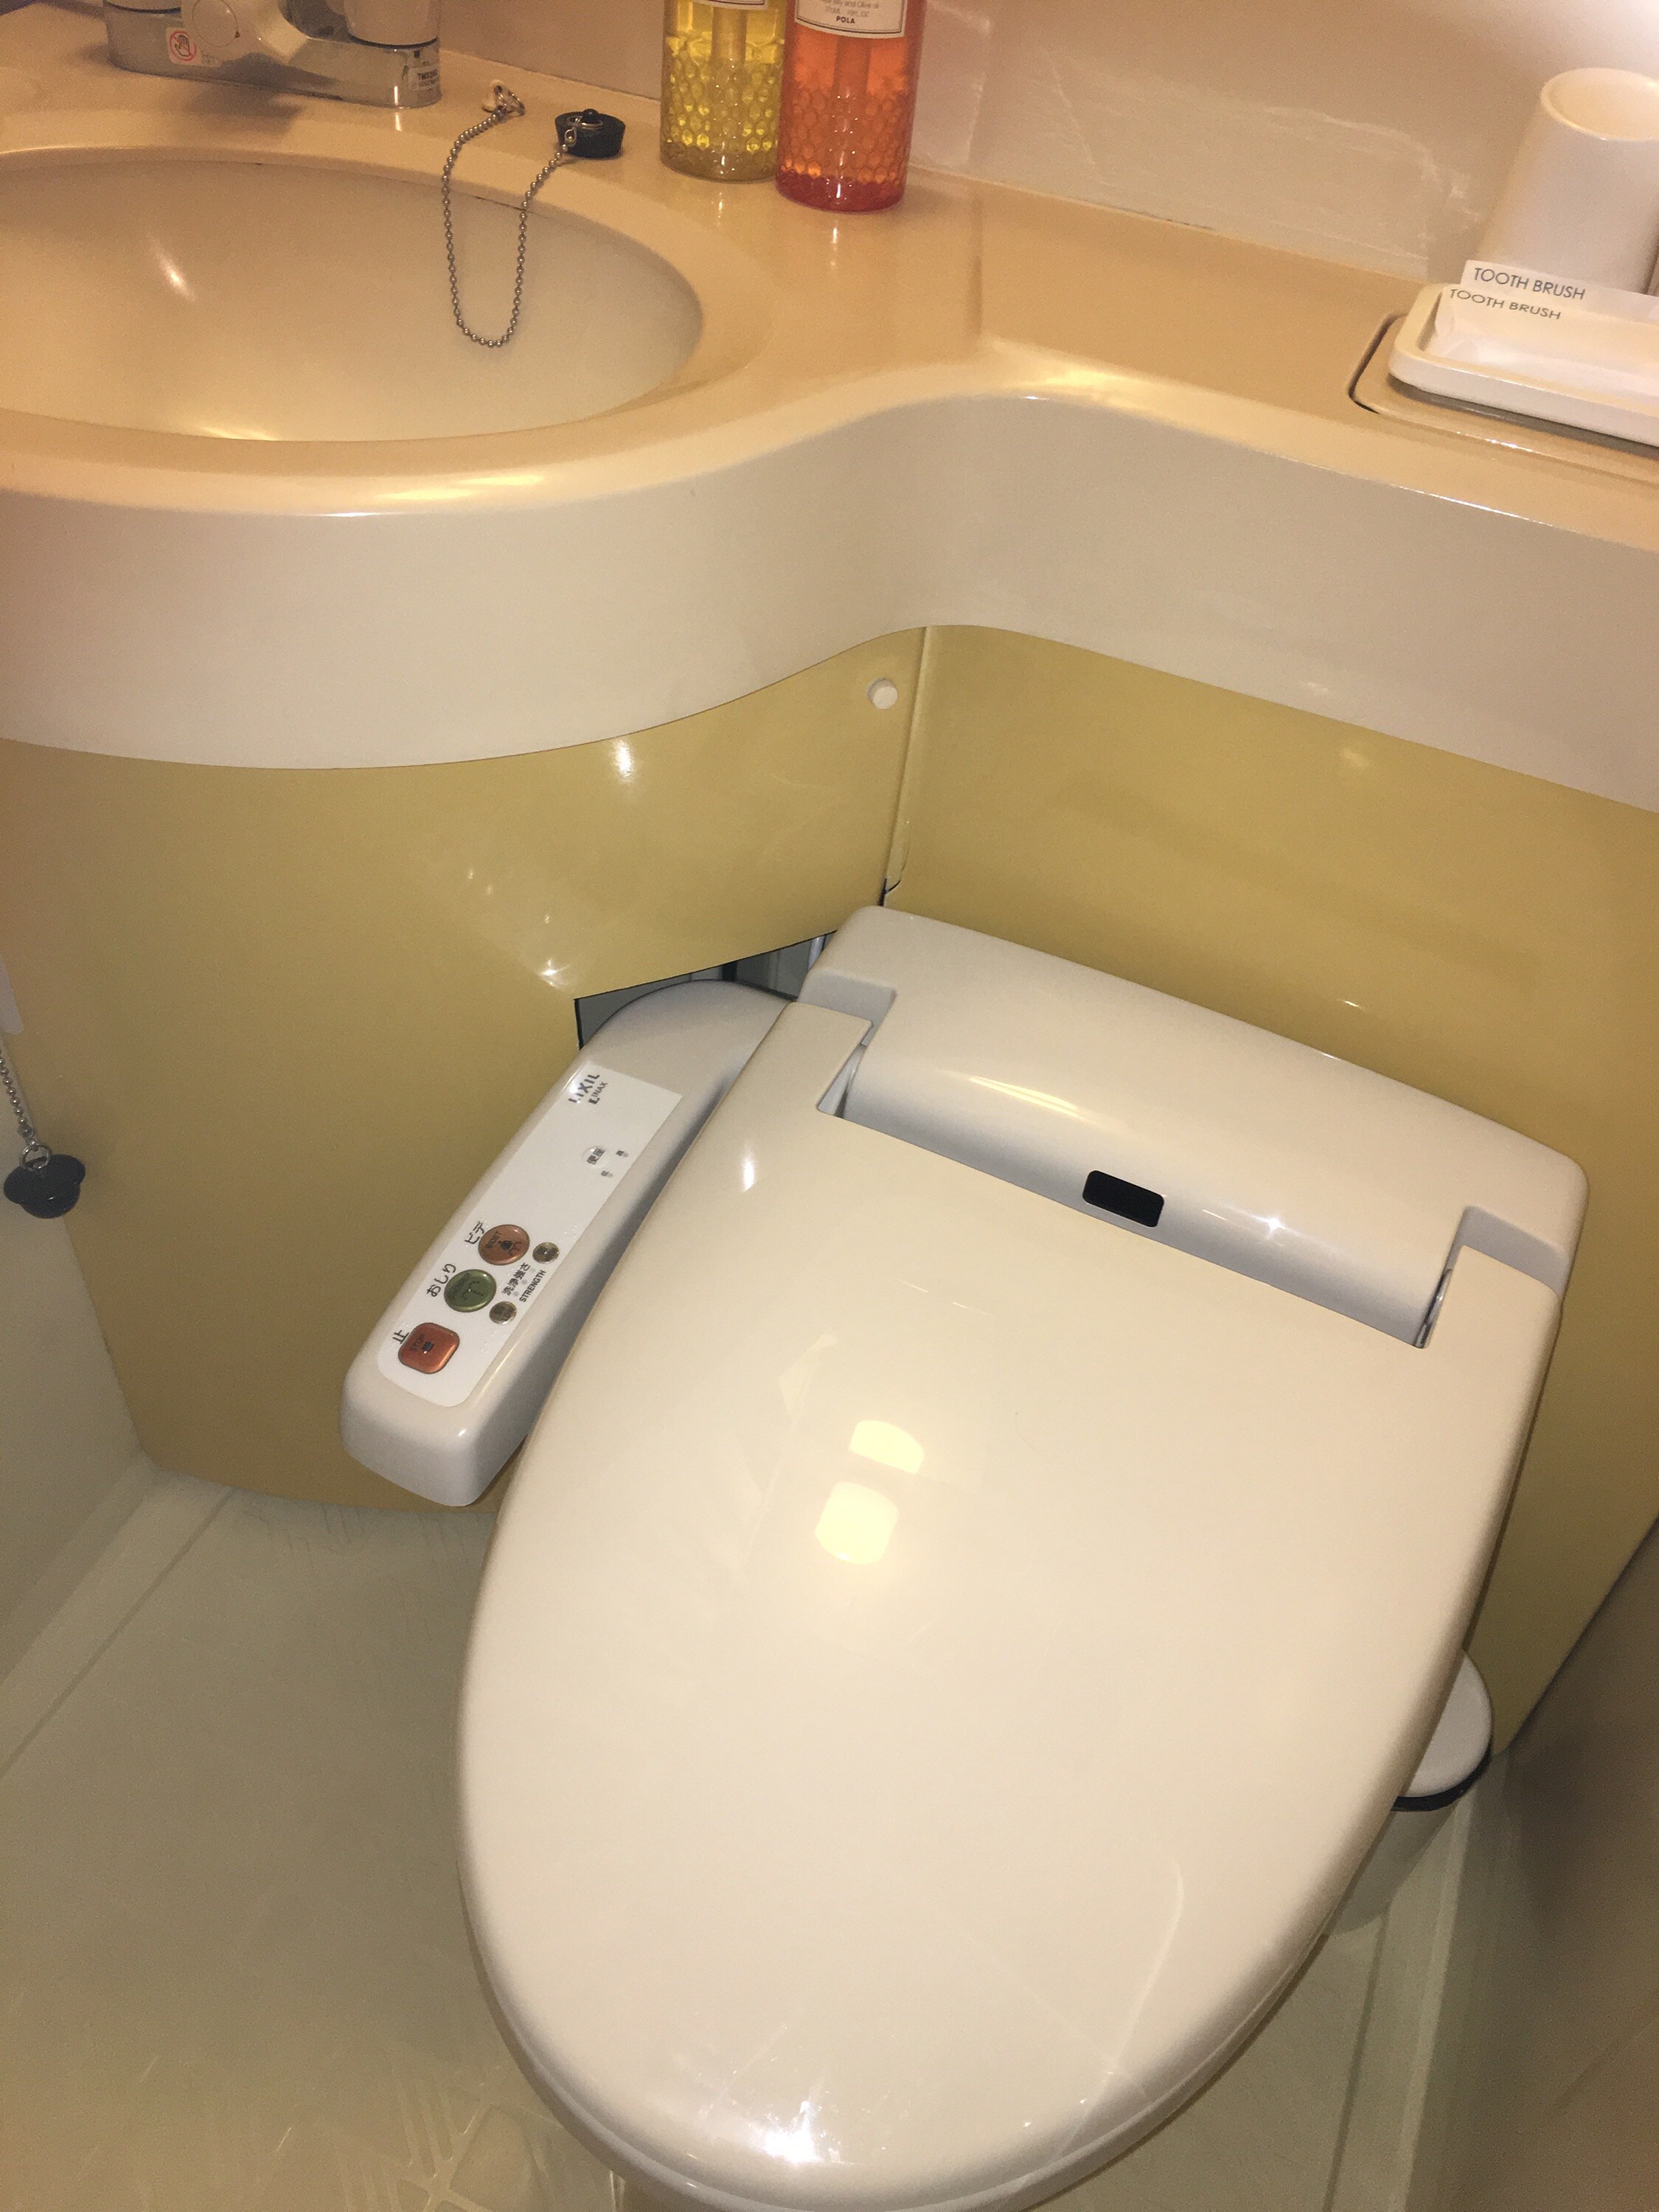 Washlet toilet seat with heater